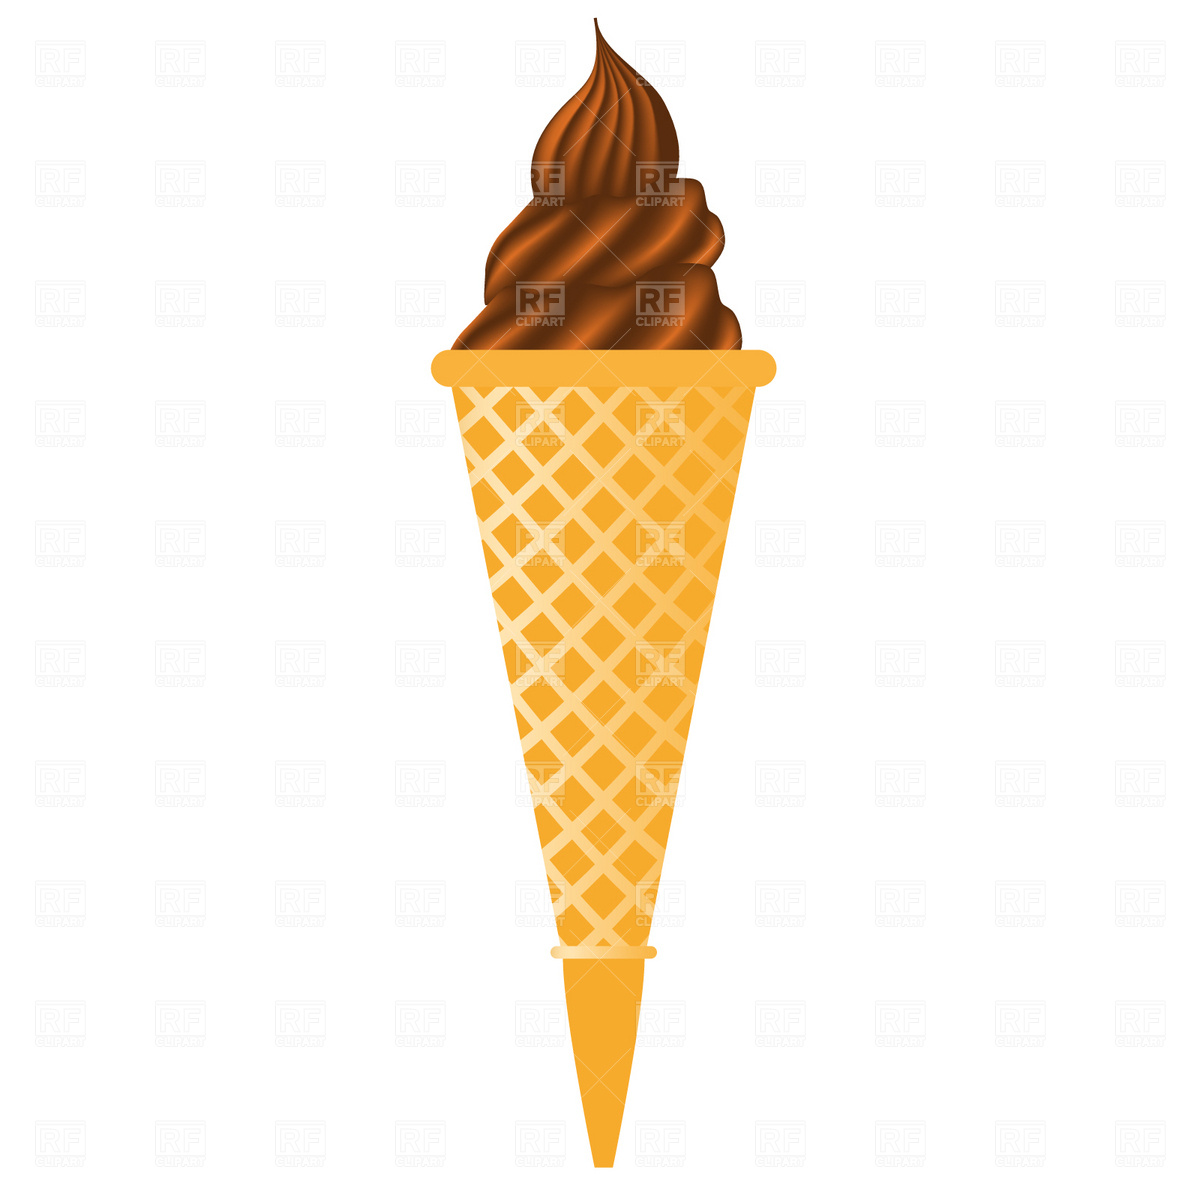 Ice Cream Cone Ice Creamne Summer Image Clipart